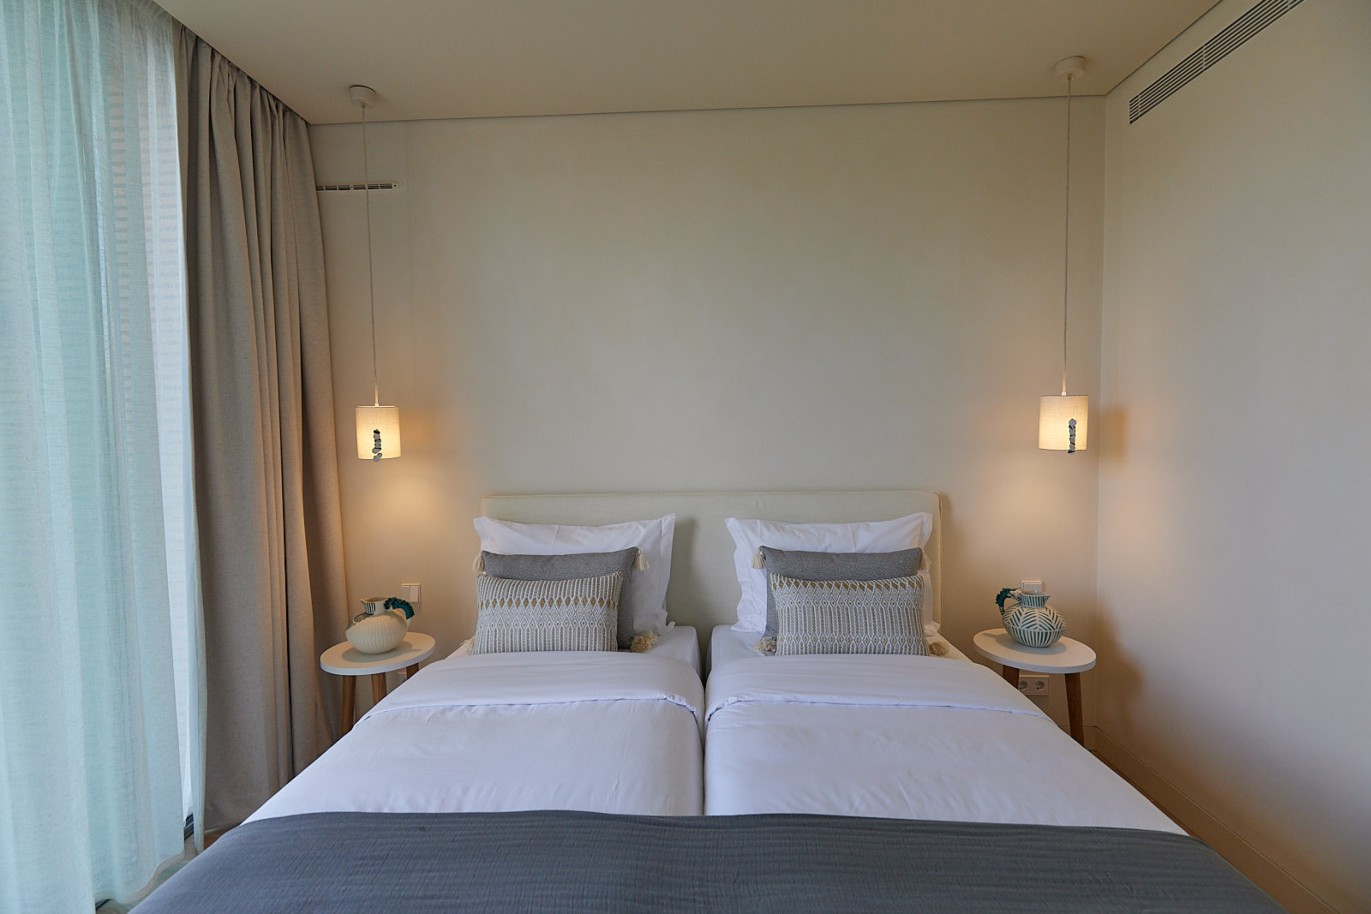 2 bedroom apartment in resort, for sale in Porches, Algarve_230549